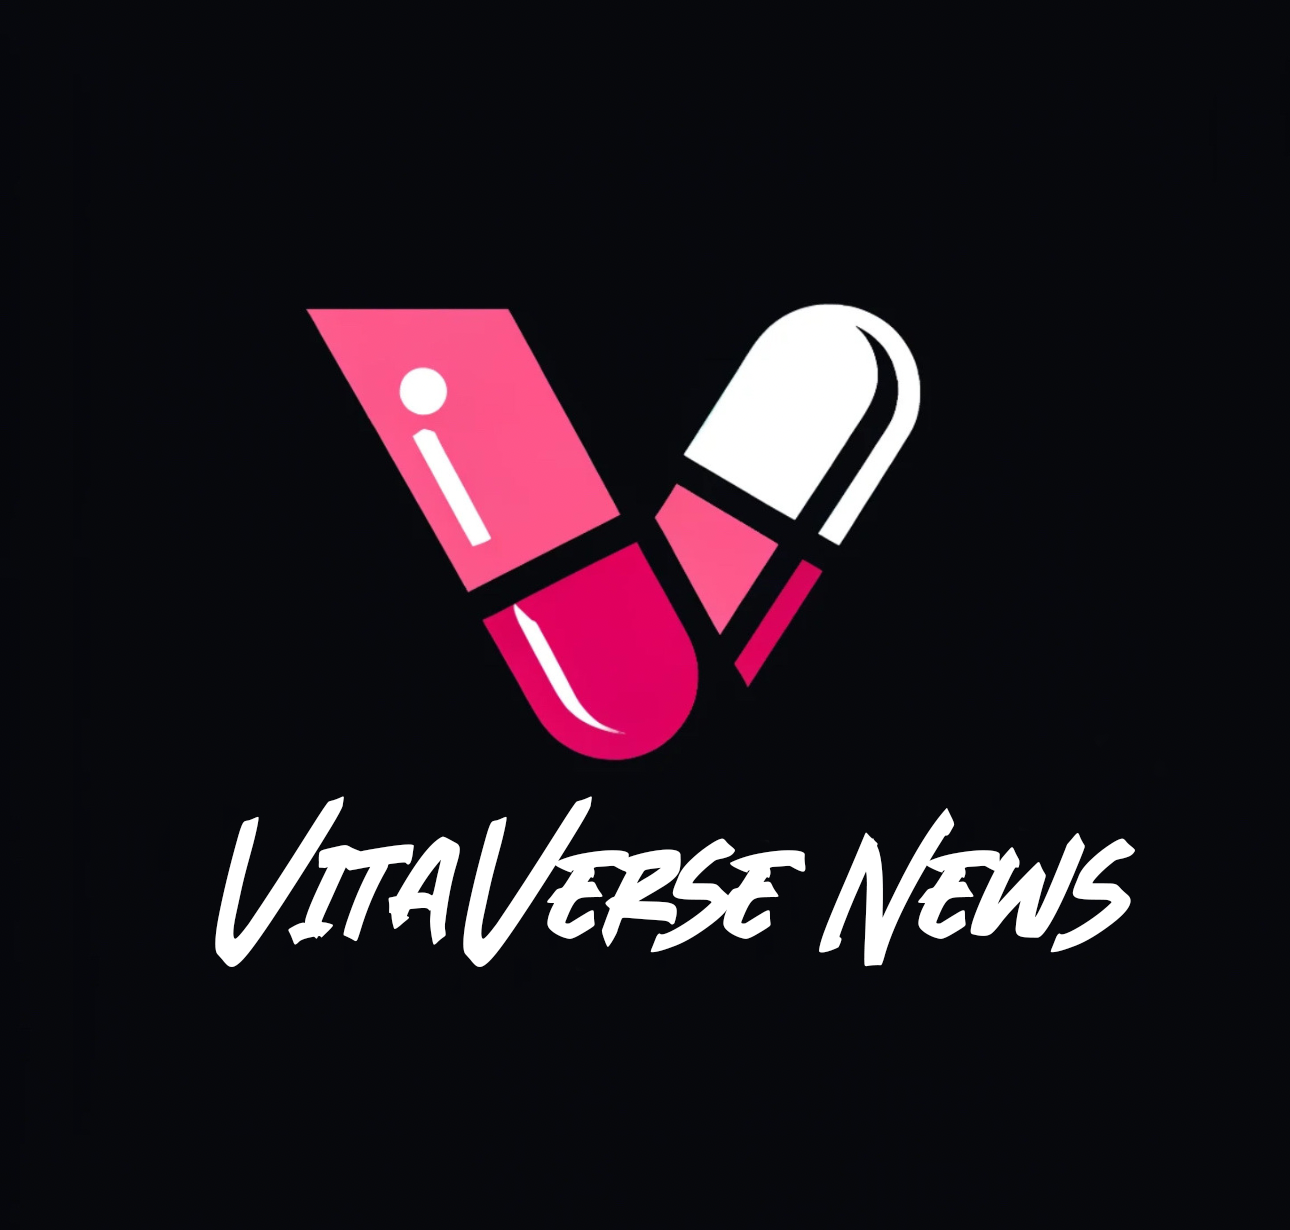 VitaVerse News